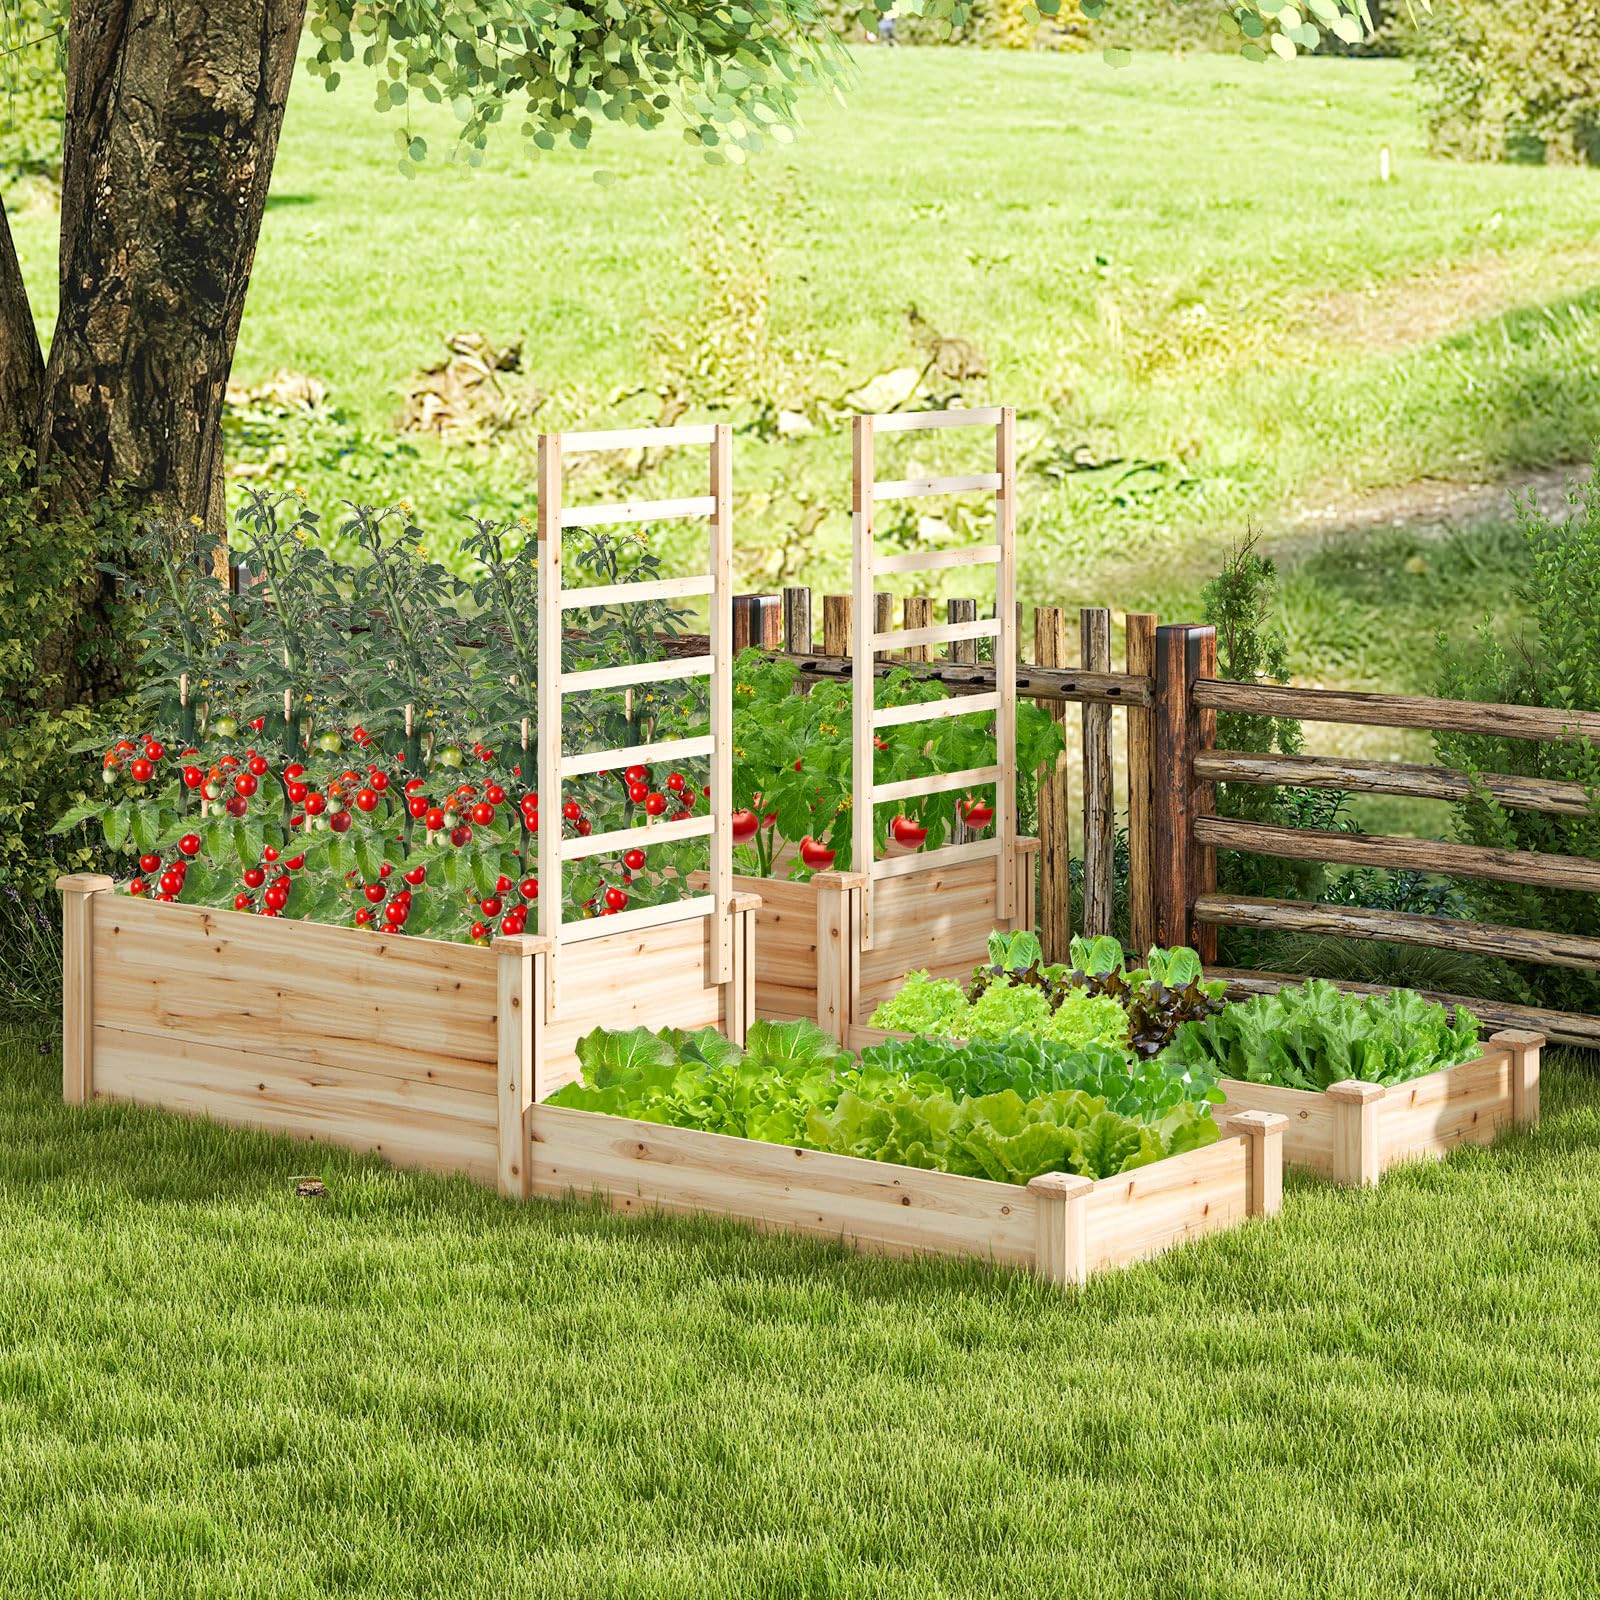 Giantex Raised Garden Bed with Trellis, Set of 2 Wood Shallow & Deep Planter Box for Climbing Plants